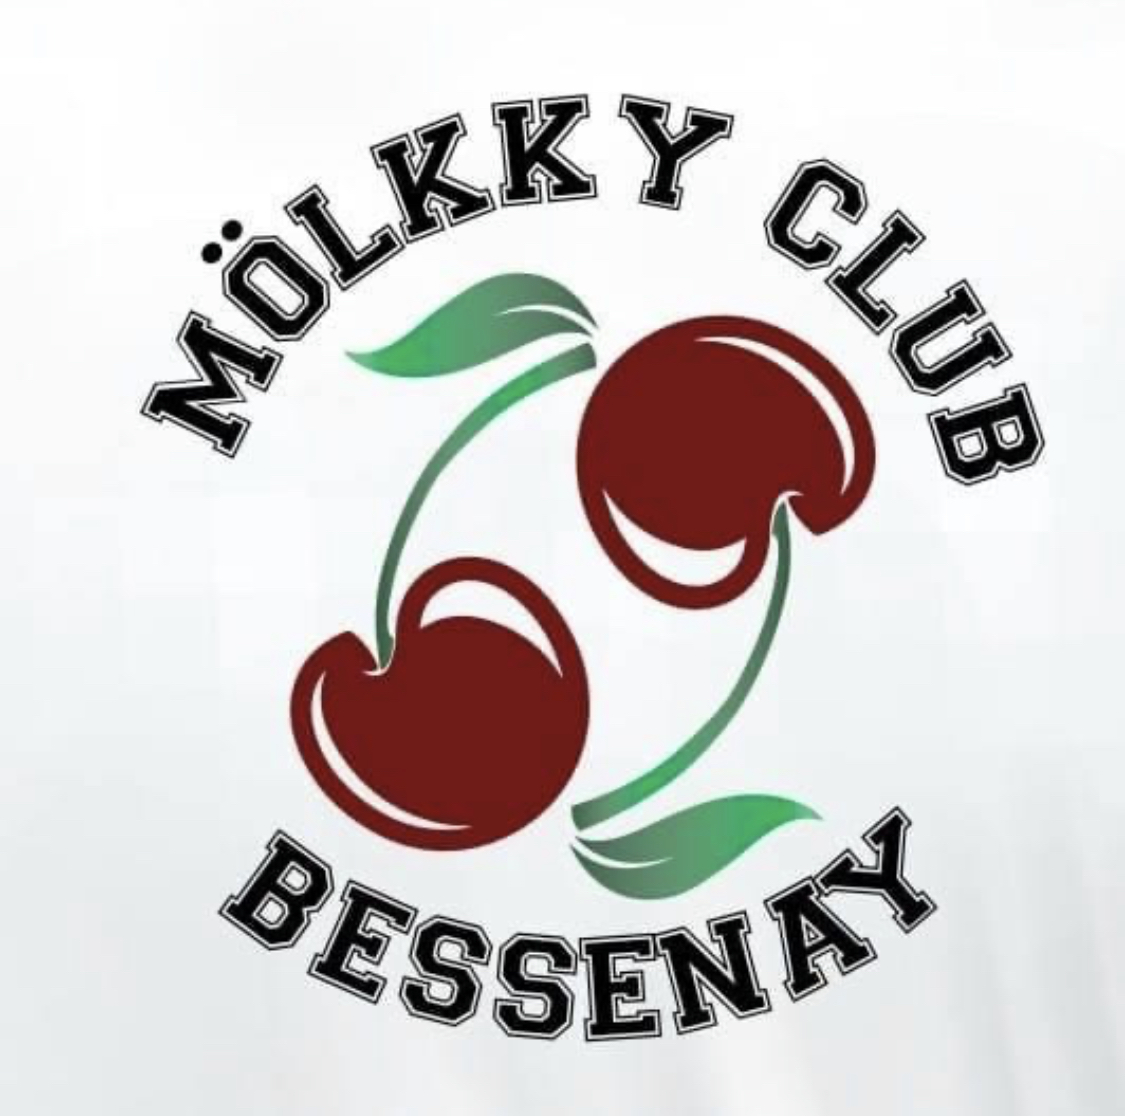 Mölkky Club de Bessenay